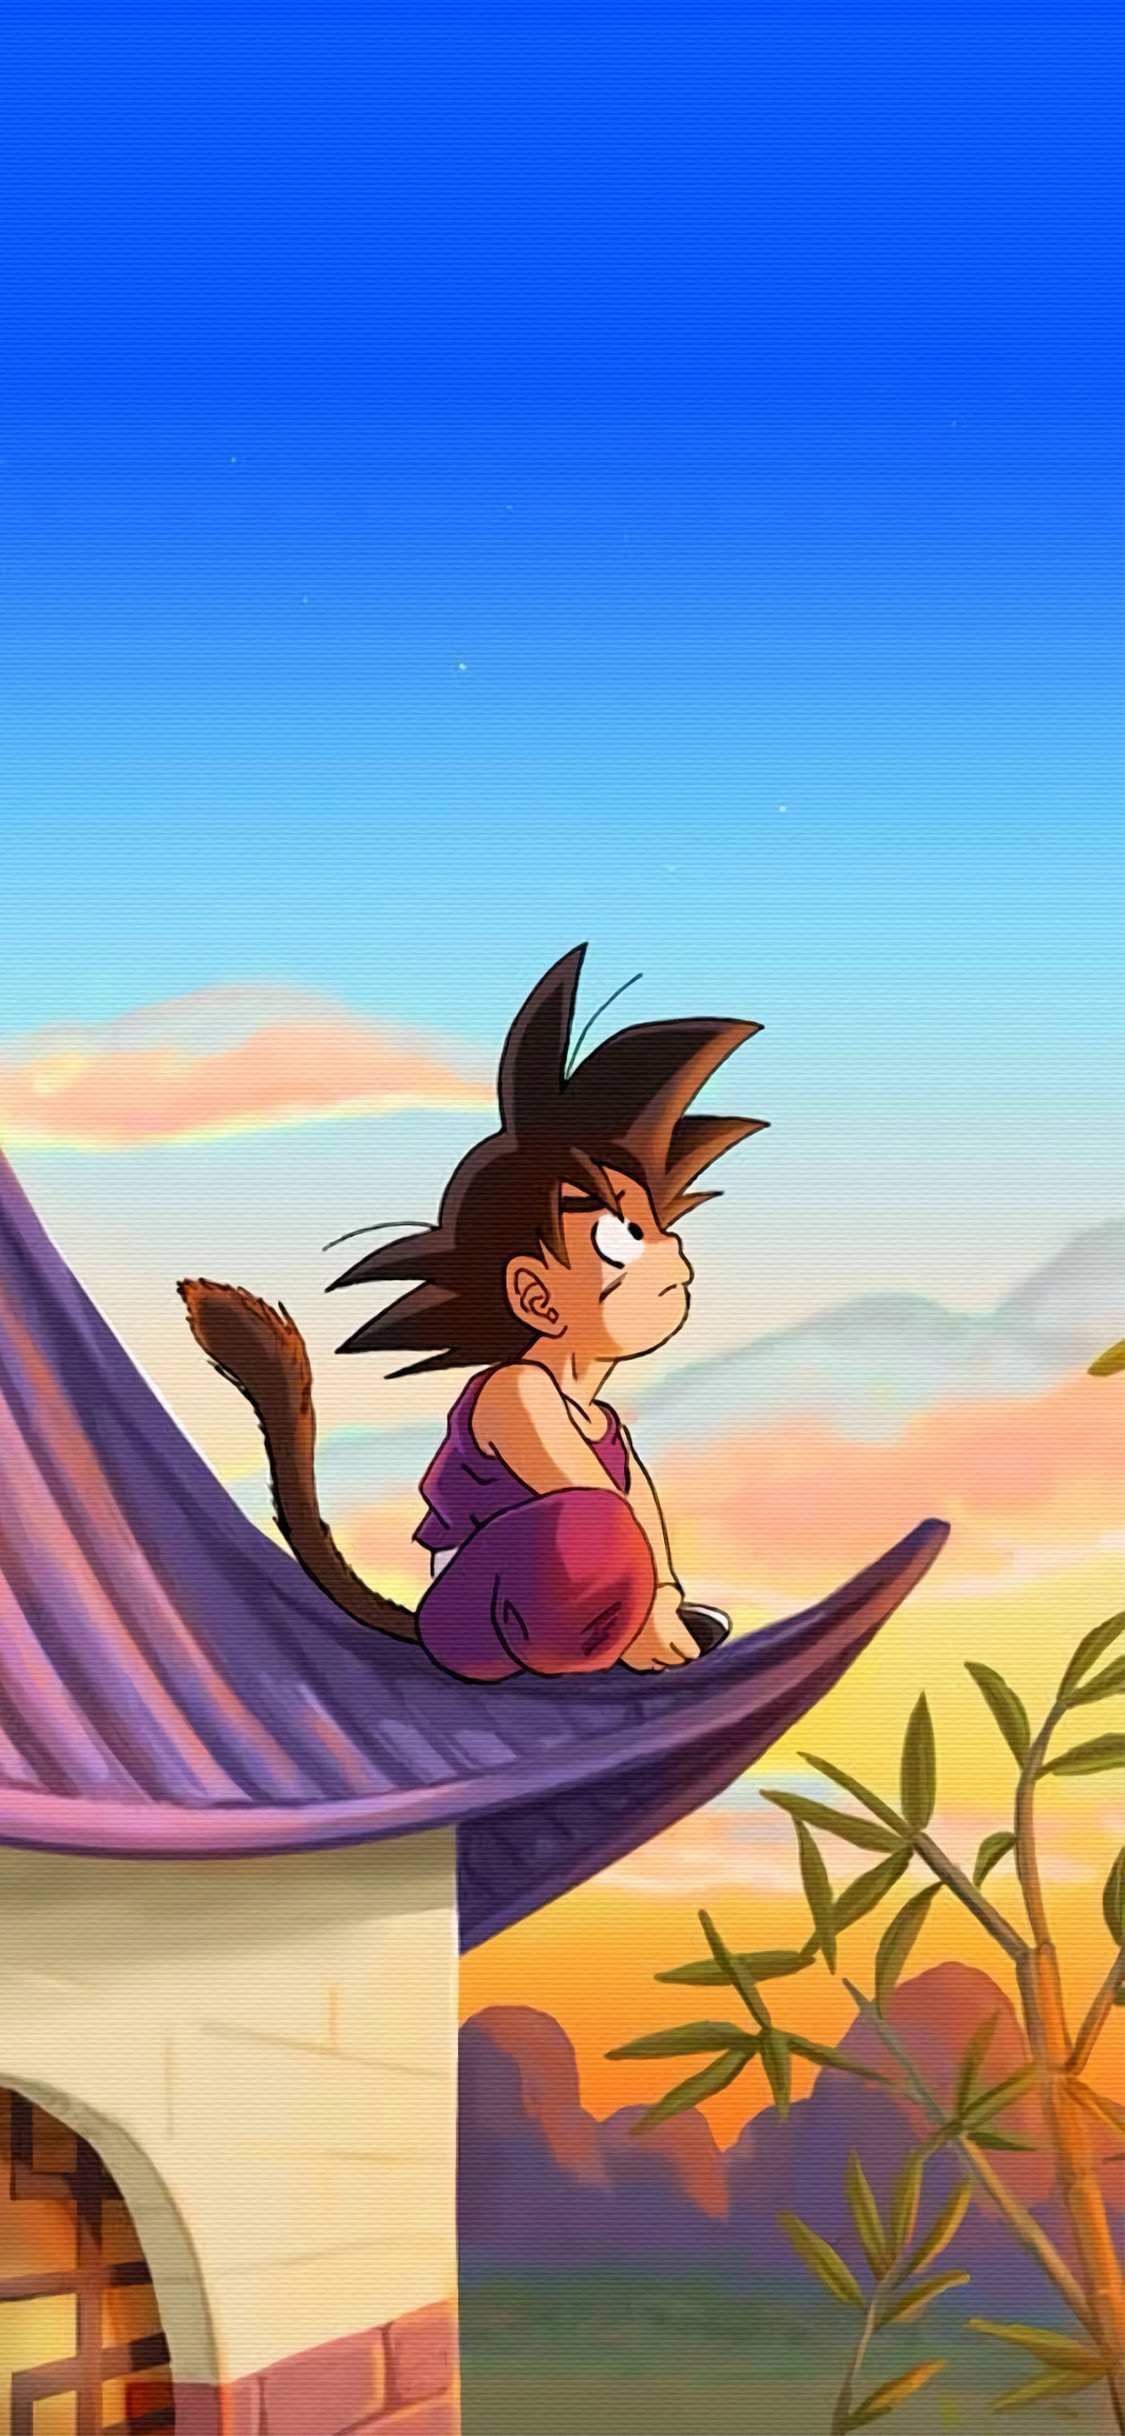 Dragon Ball Super Goku 4K wallpaper download